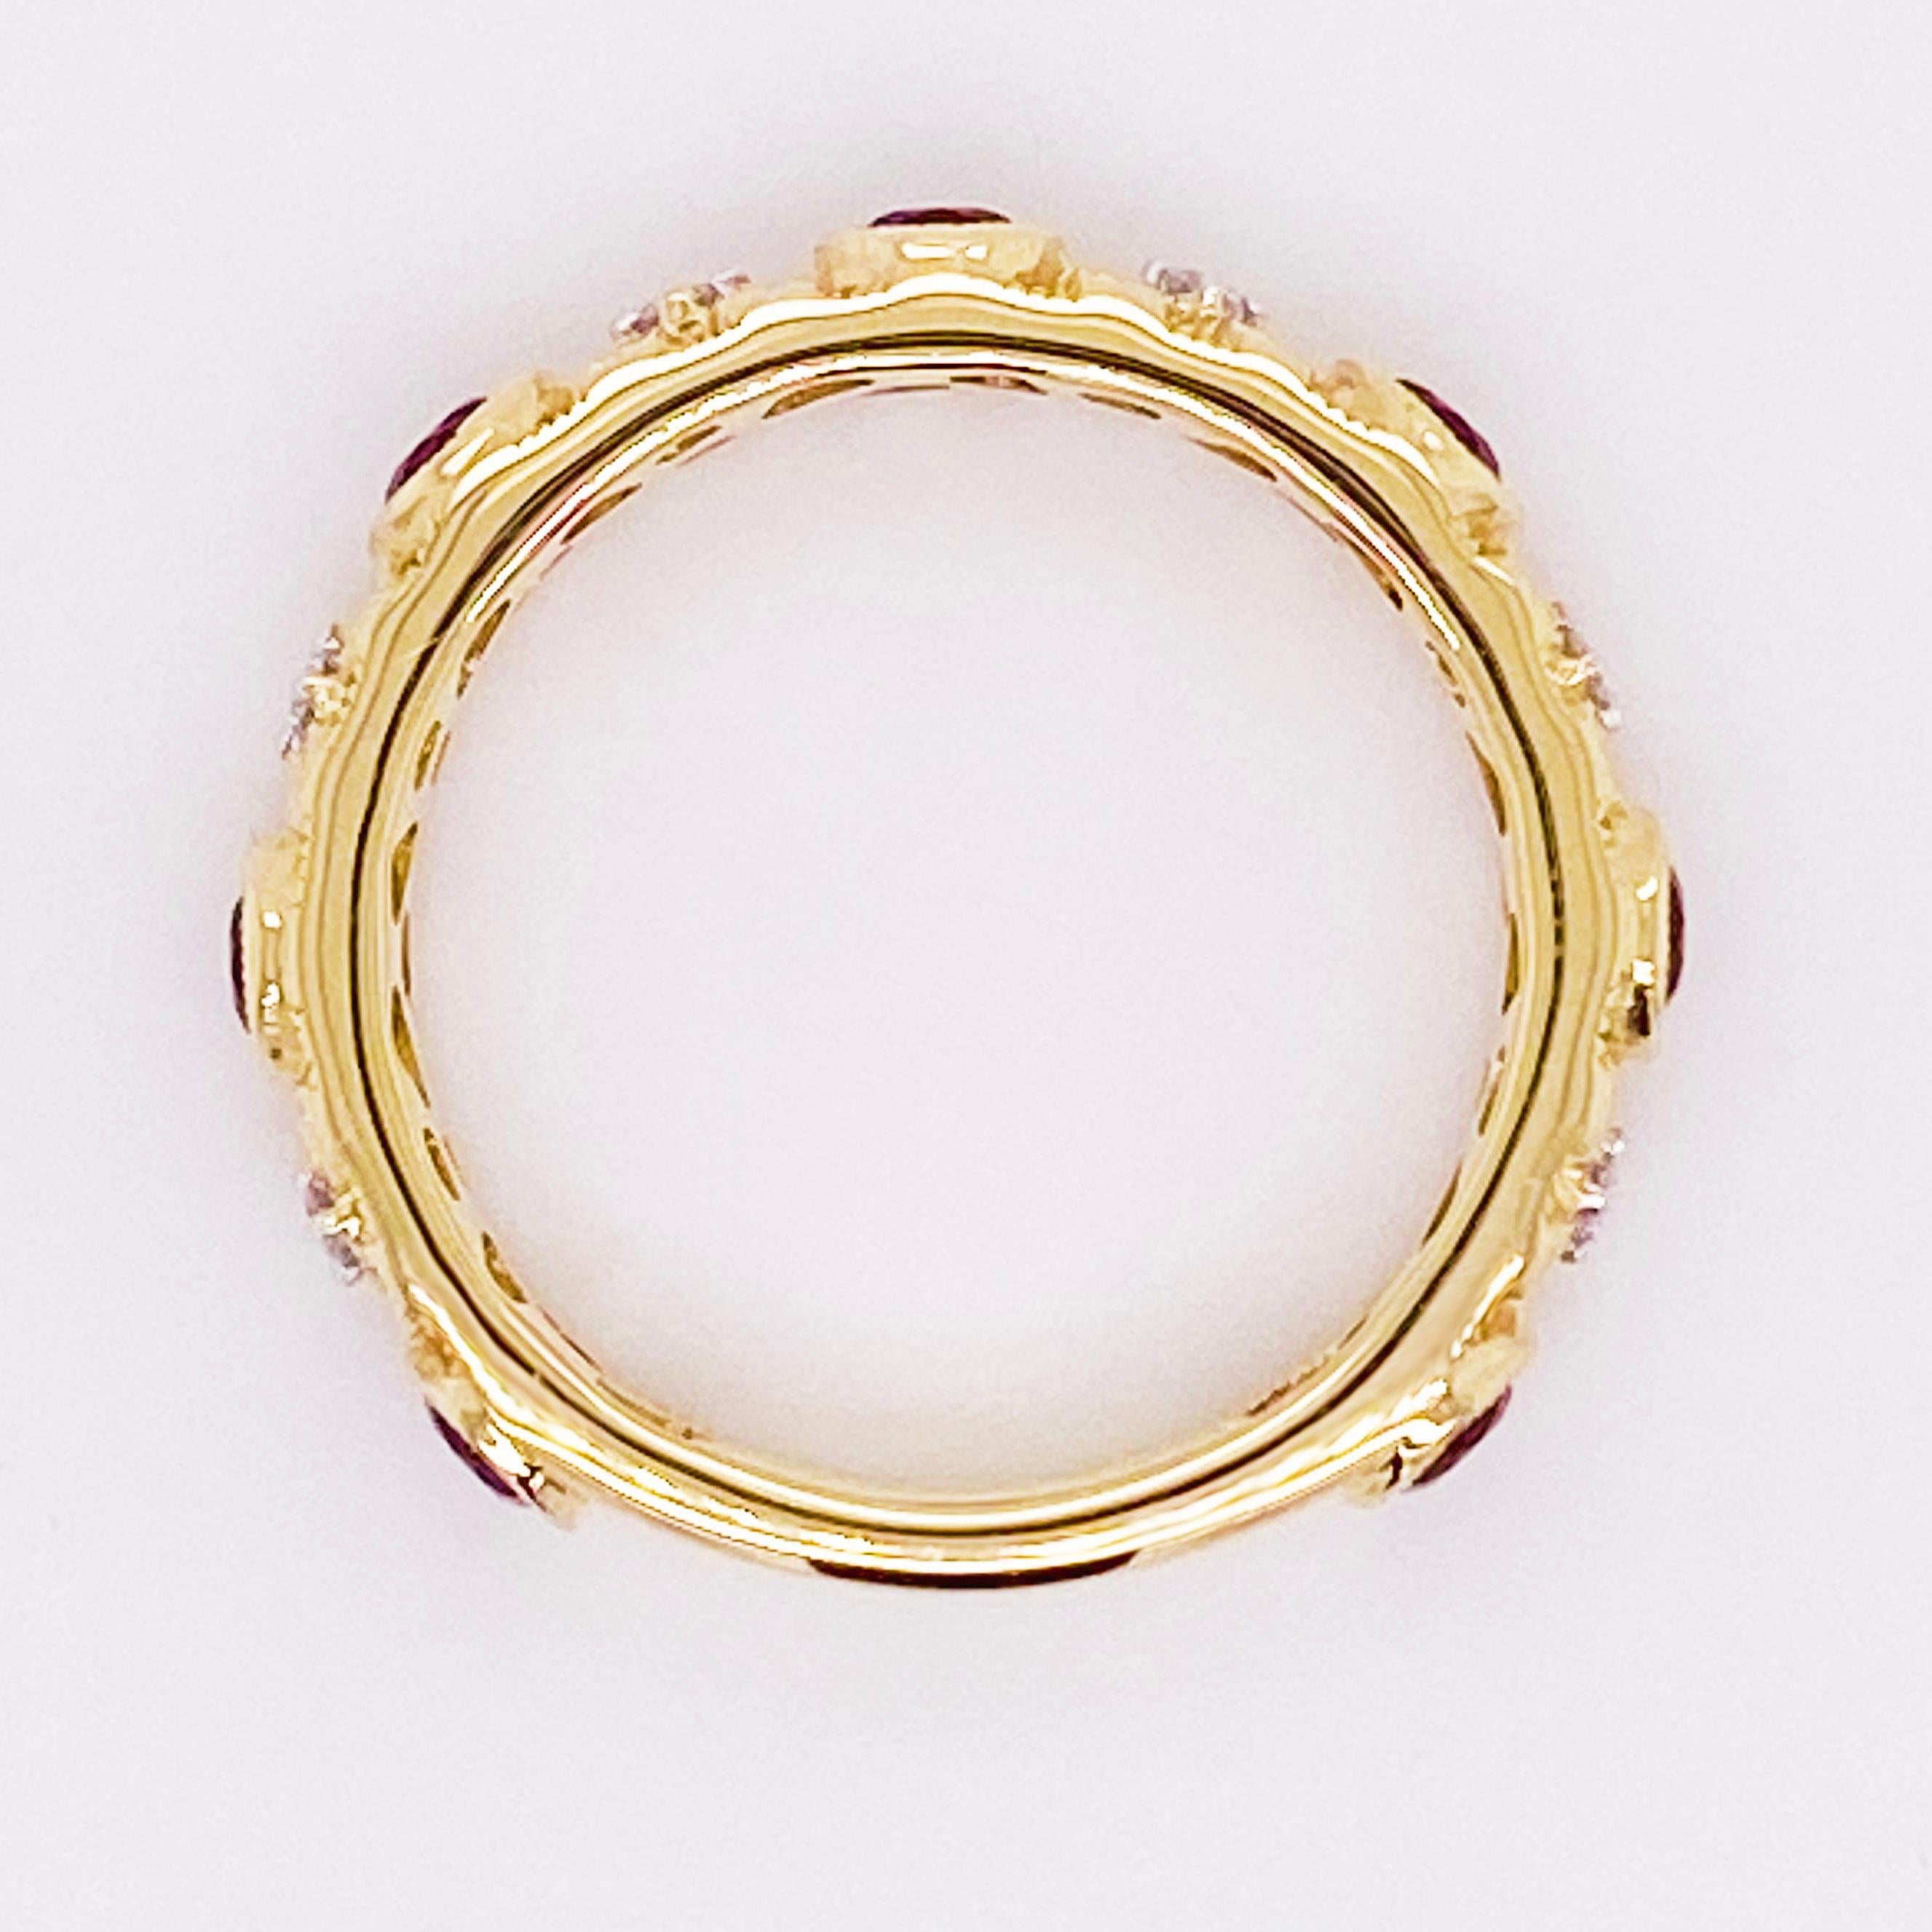 Women's Garnet Diamond Ring, 14 Karat Gold Filigree Garnet and Diamond Band, 1.00 Carat